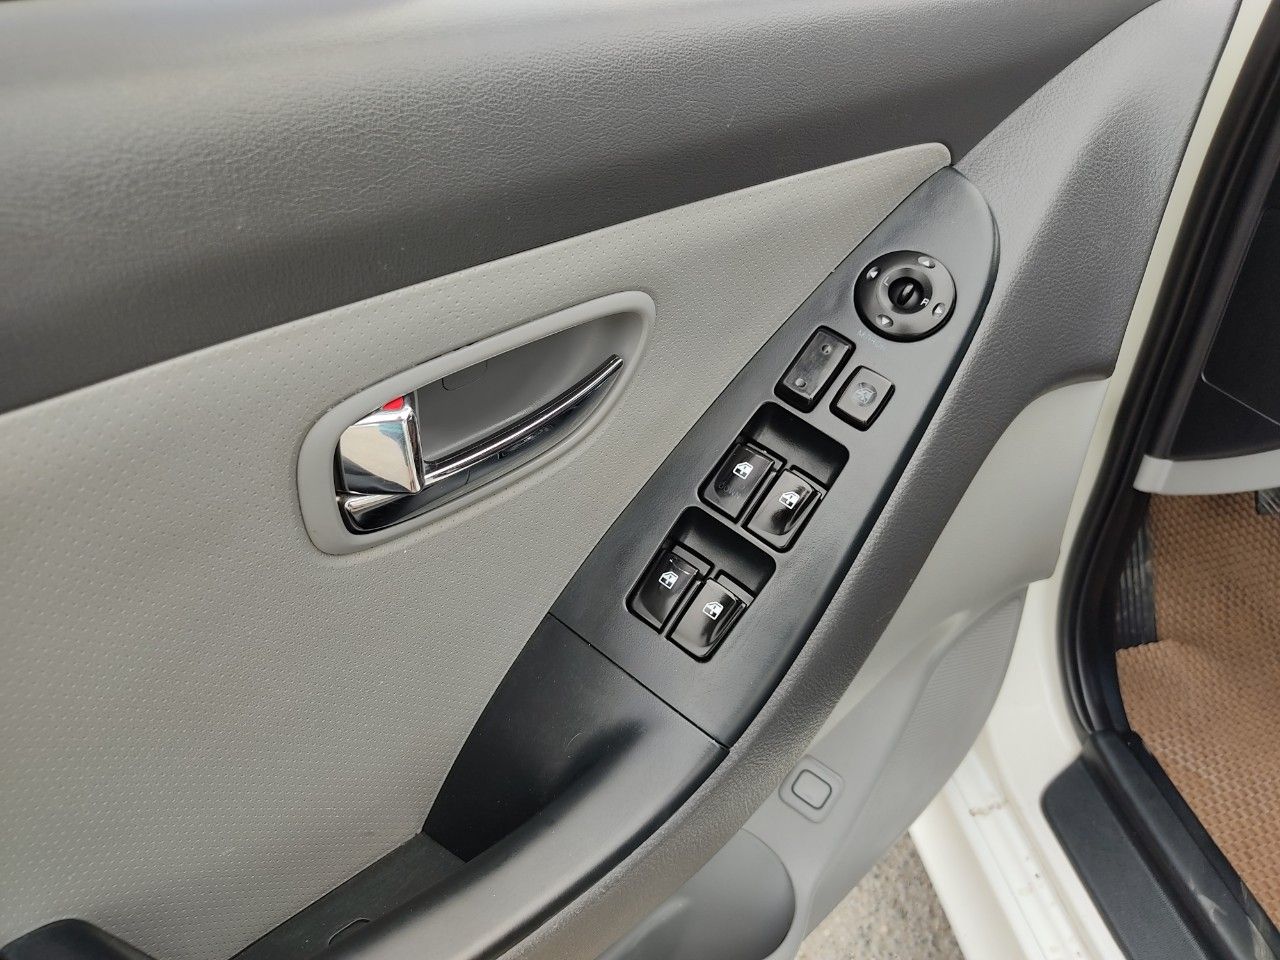 Hyundai Avante 2011 - Bản 1.6MT phân khúc hạng C